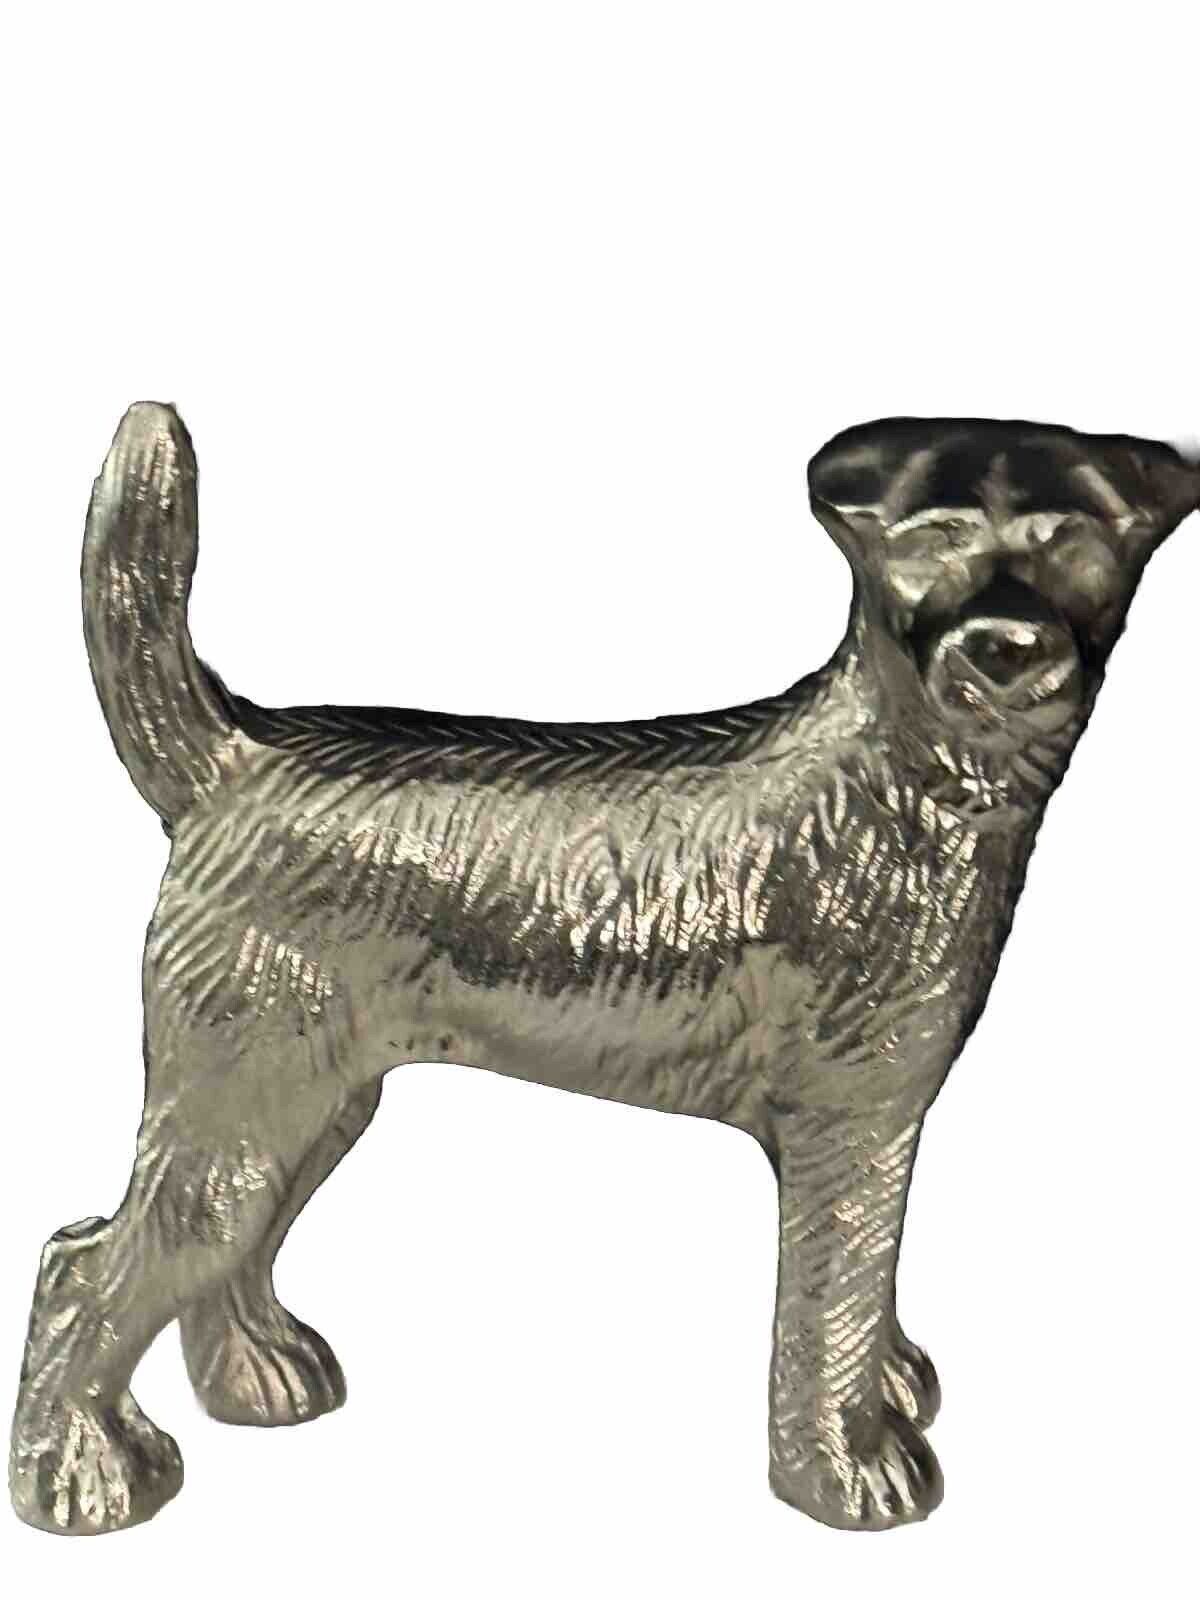 Vintage Regency international nickel plated Large Solid dog  Lab figurine